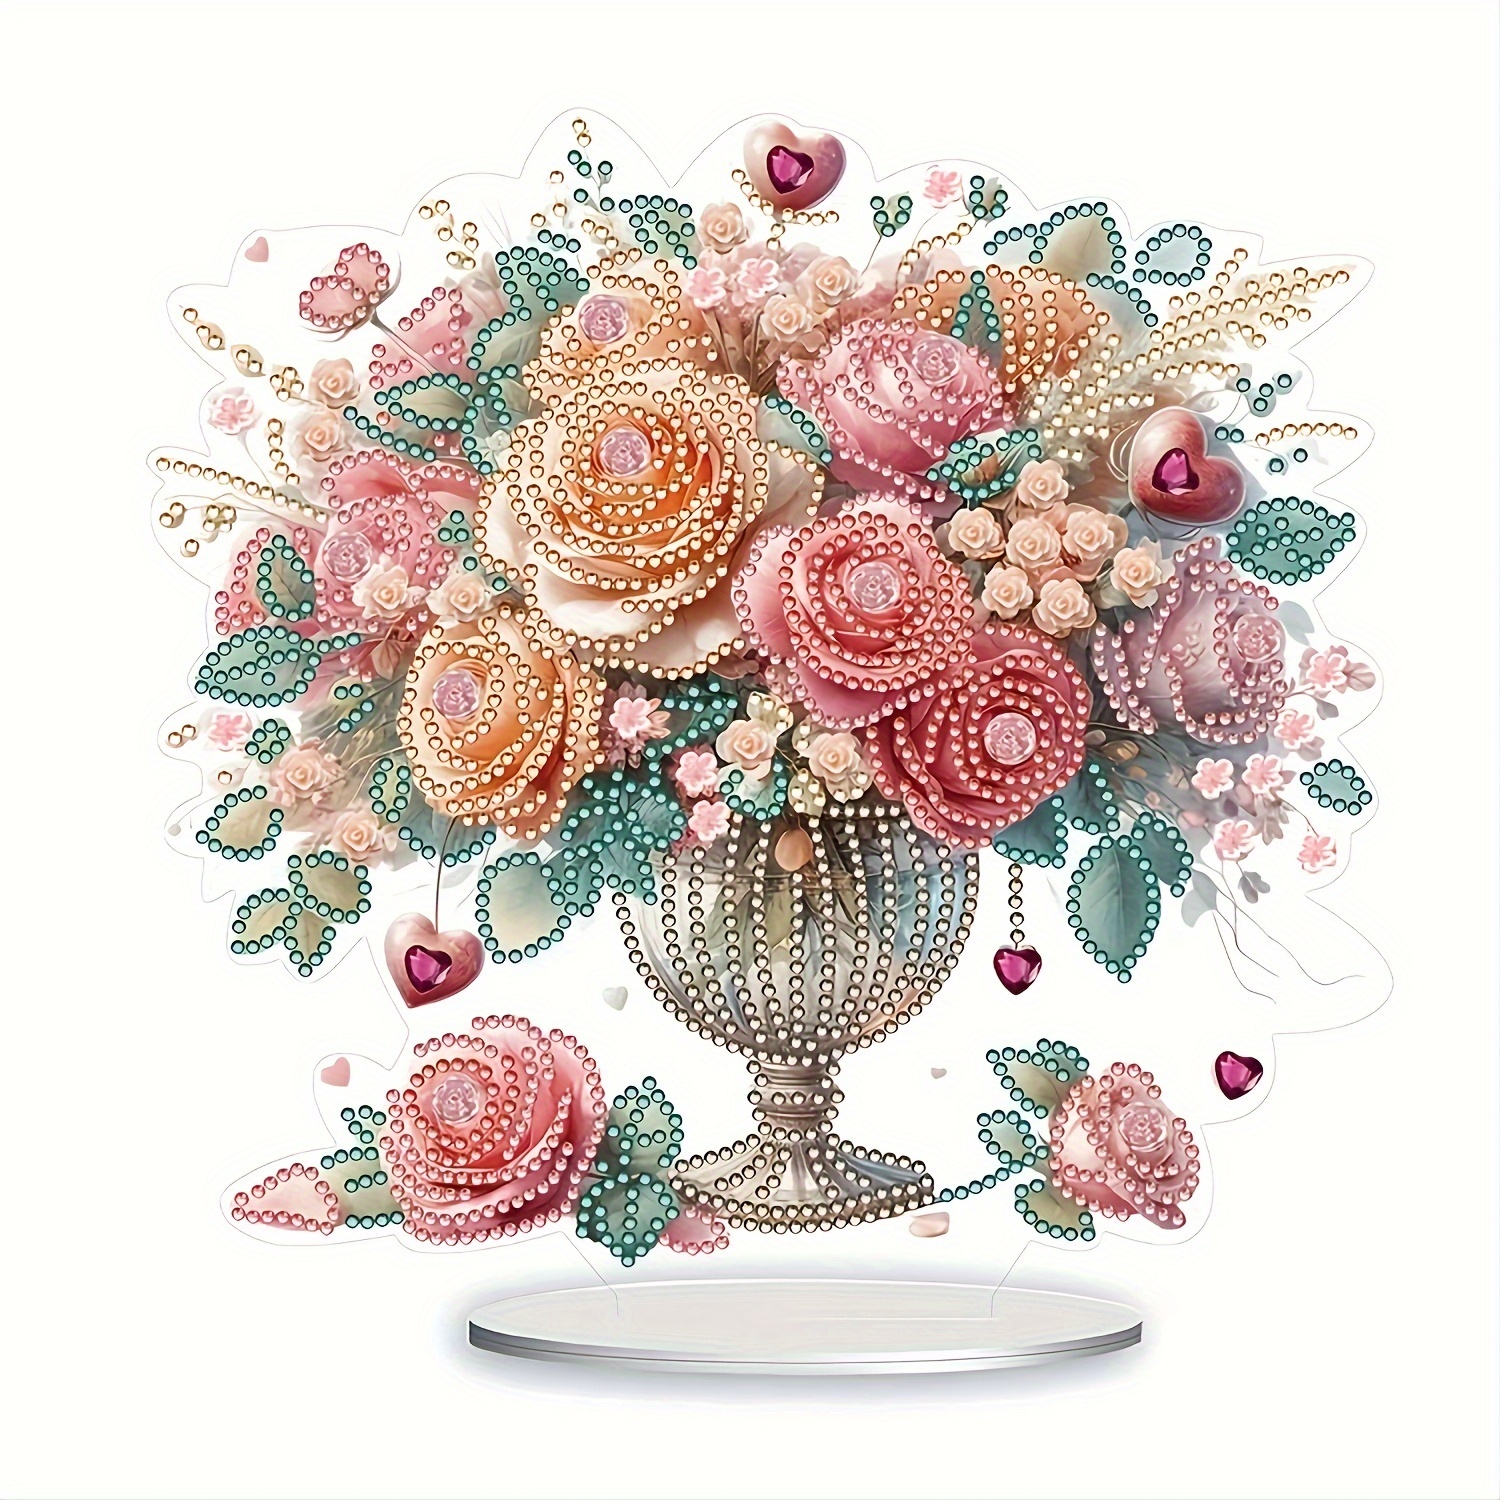 

floral Gemstone" Diy Flower Bouquet Vase 5d Diamond Art Kit - Irregular Shaped Acrylic Gems, Mosaic Craft For Bedroom & Dining Table Decor, Unique Gift Box